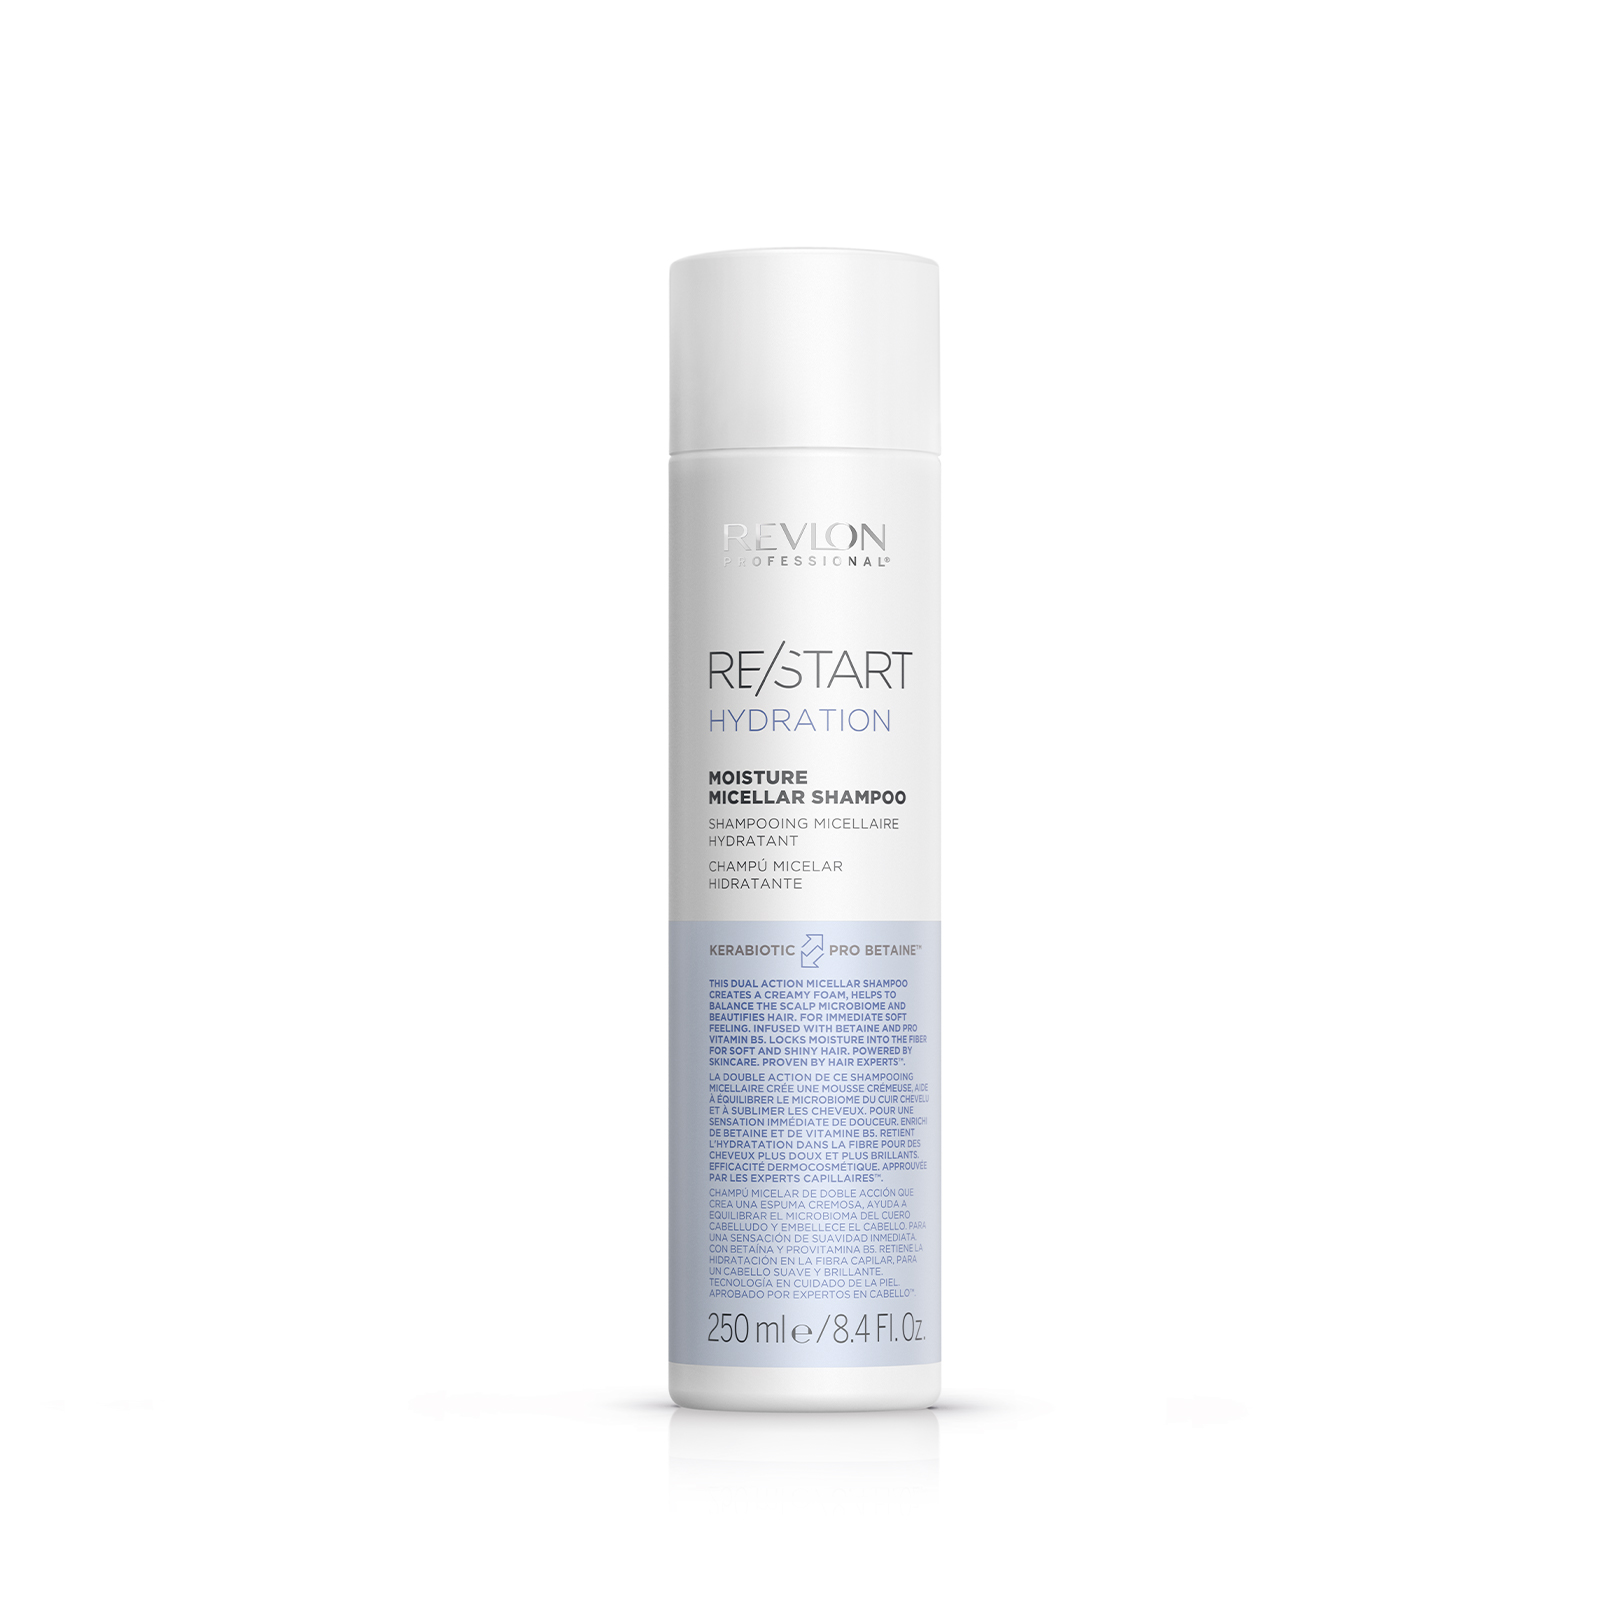 RE/START™ Hydration Moisture - Revlon Micellar Shampoo Professional